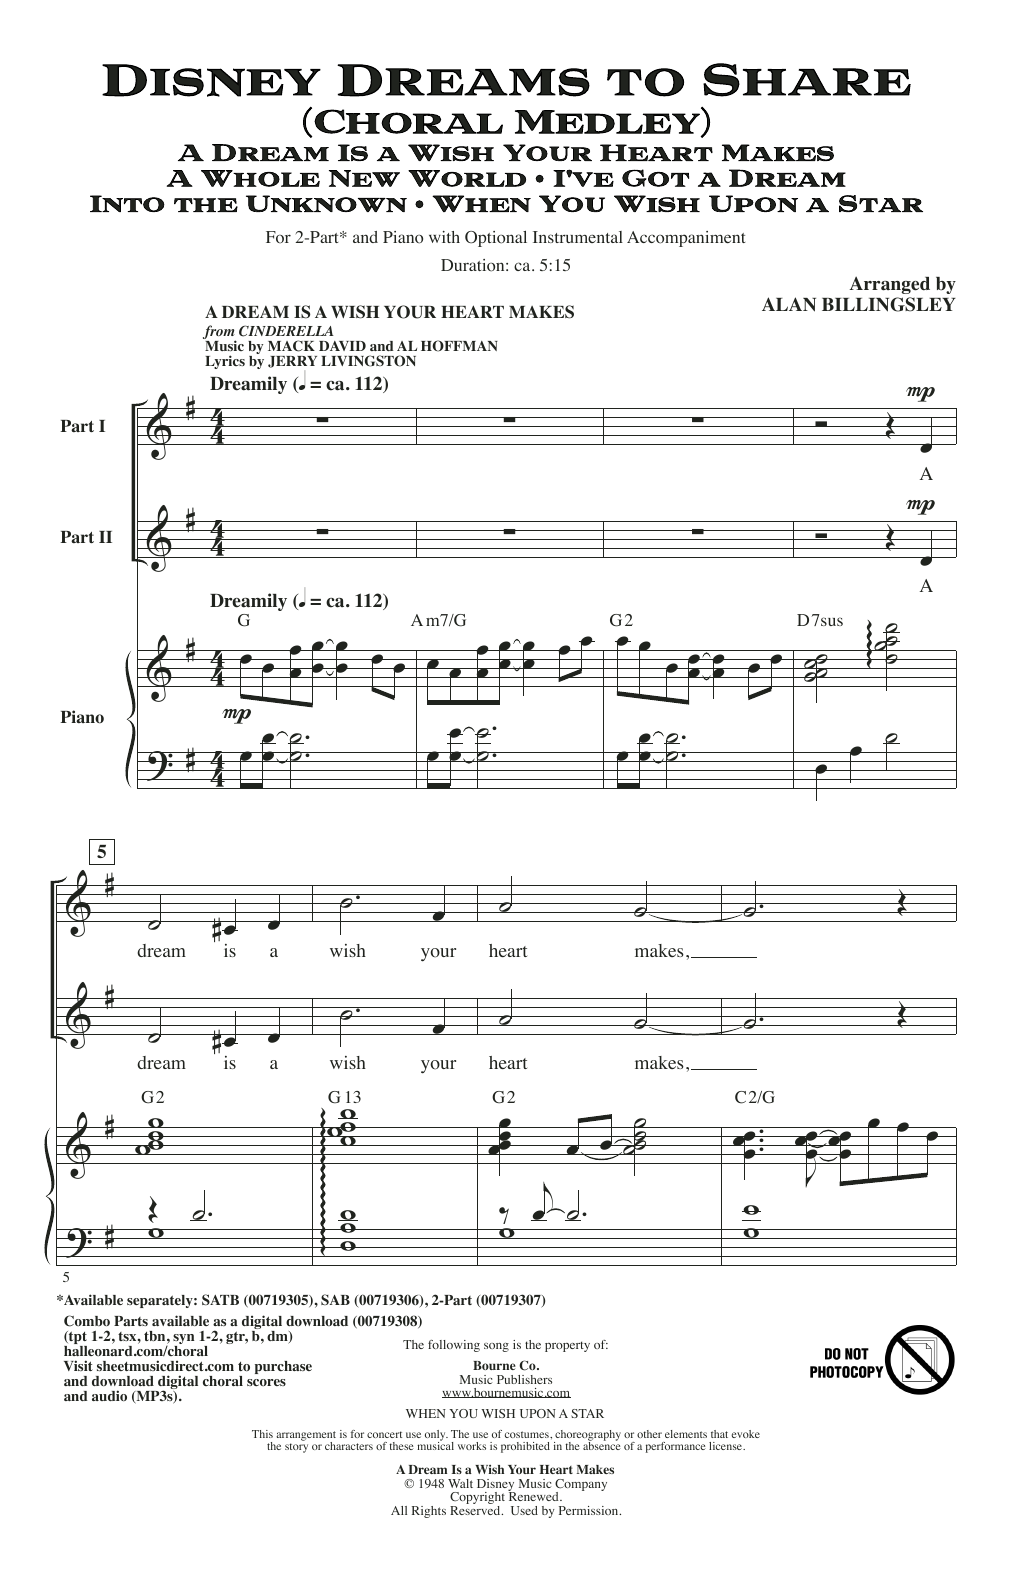 Alan Billingsley Disney Dreams To Share (Choral Medley) Sheet Music Notes & Chords for 2-Part Choir - Download or Print PDF